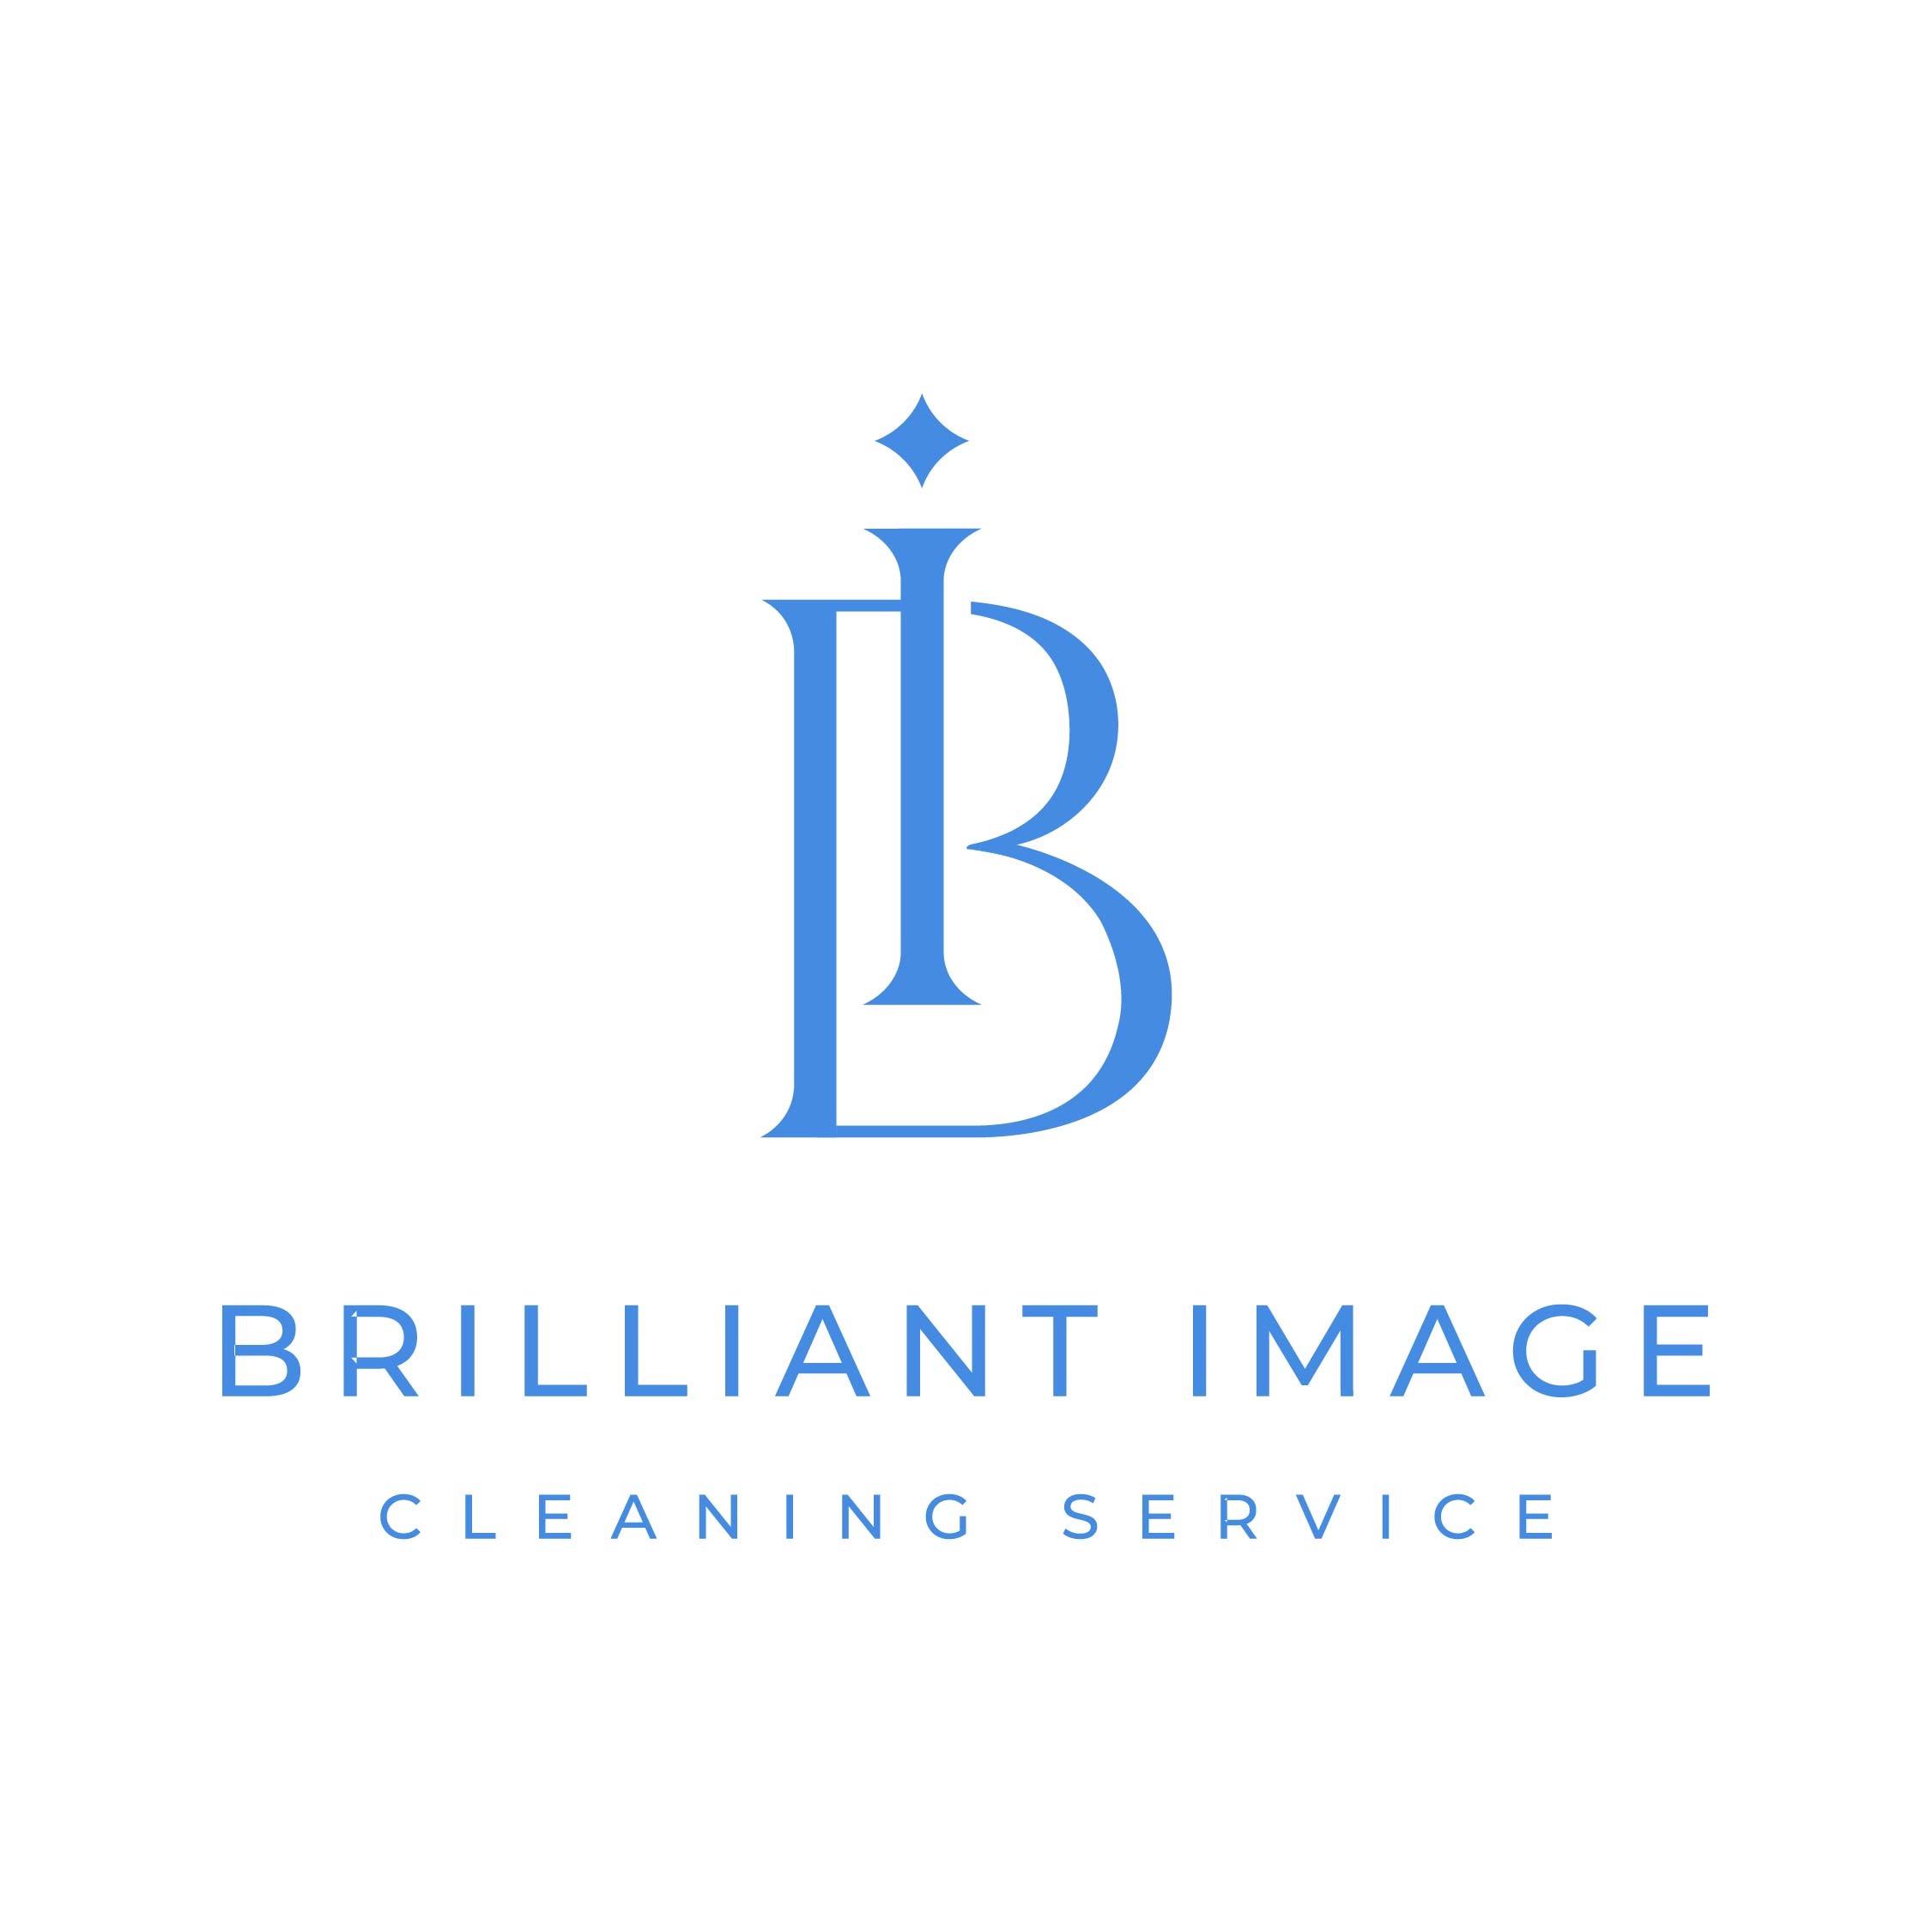 Brilliant Image Cleaning Service - Woodbridge, NJ 07095 - (732)634-1619 | ShowMeLocal.com